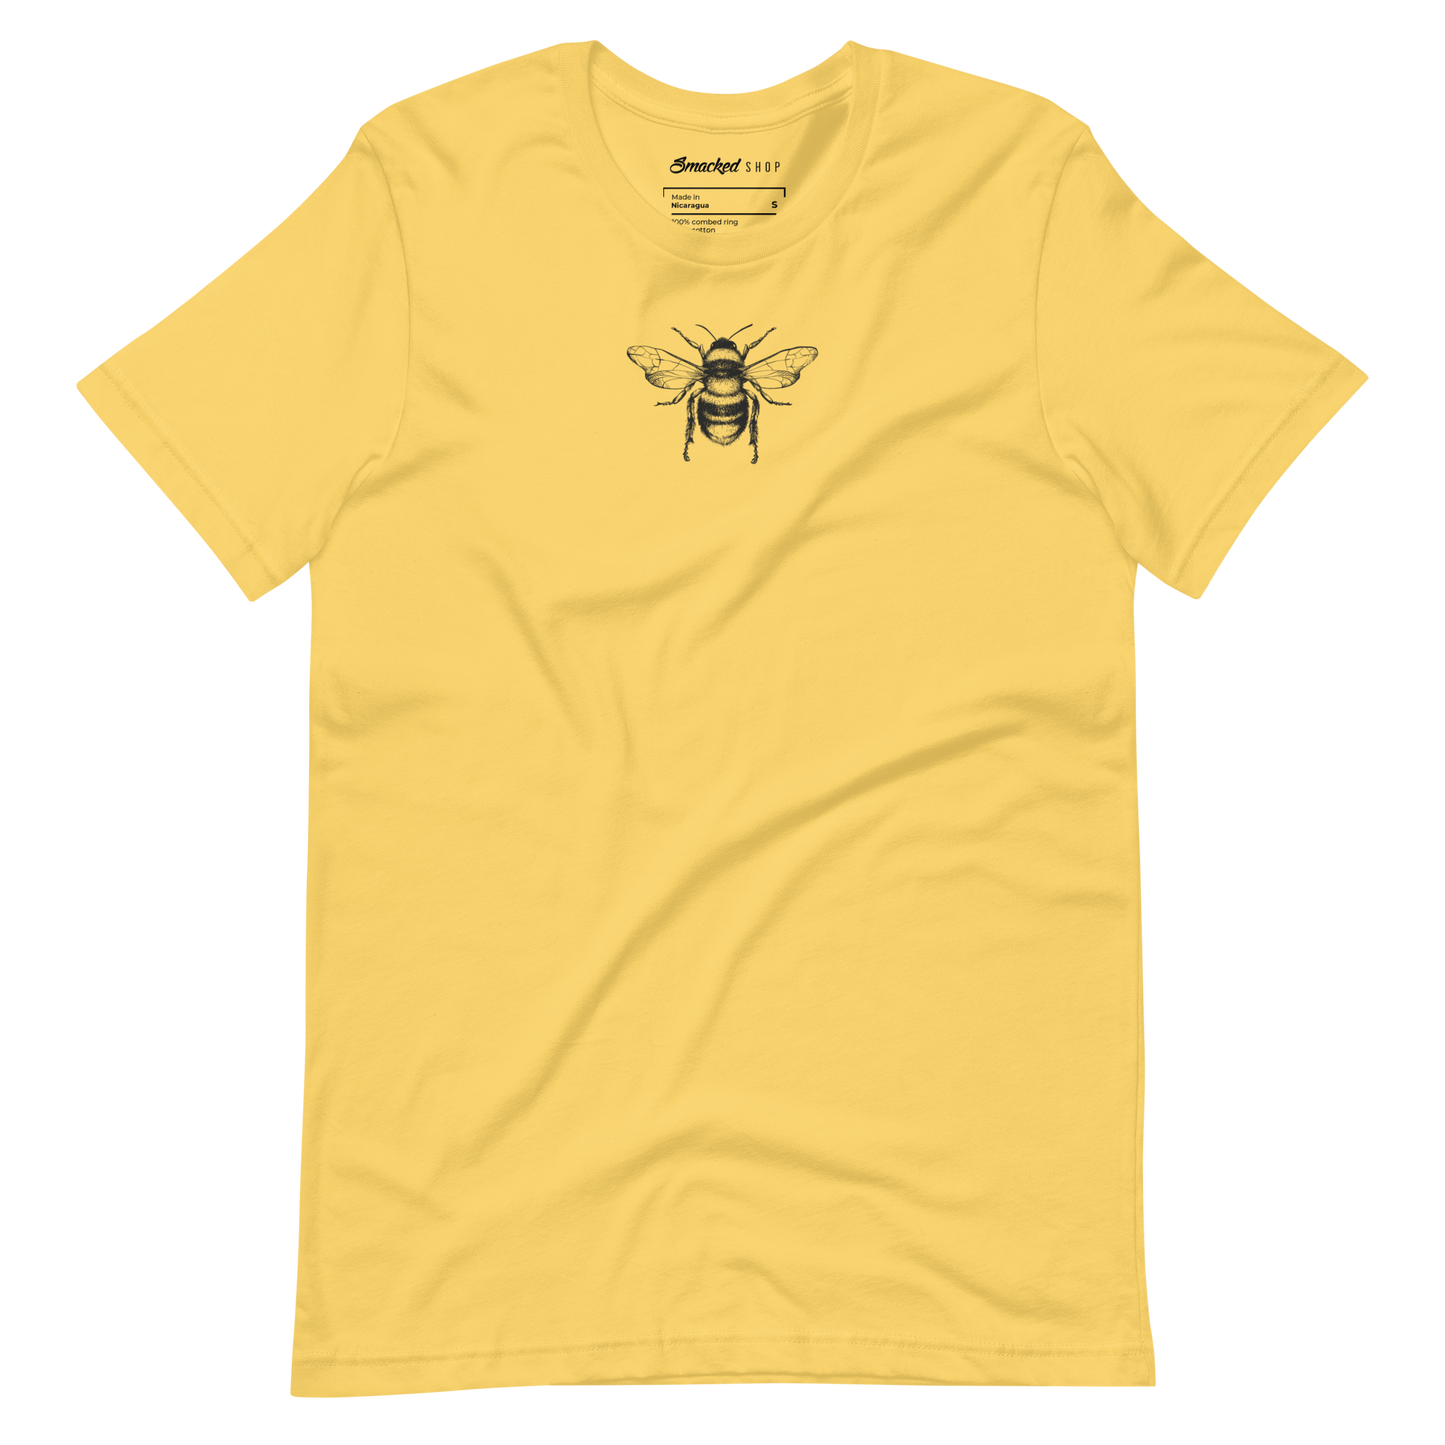 unisex-staple-t-shirt-yellow-front-64d1d9db850a1